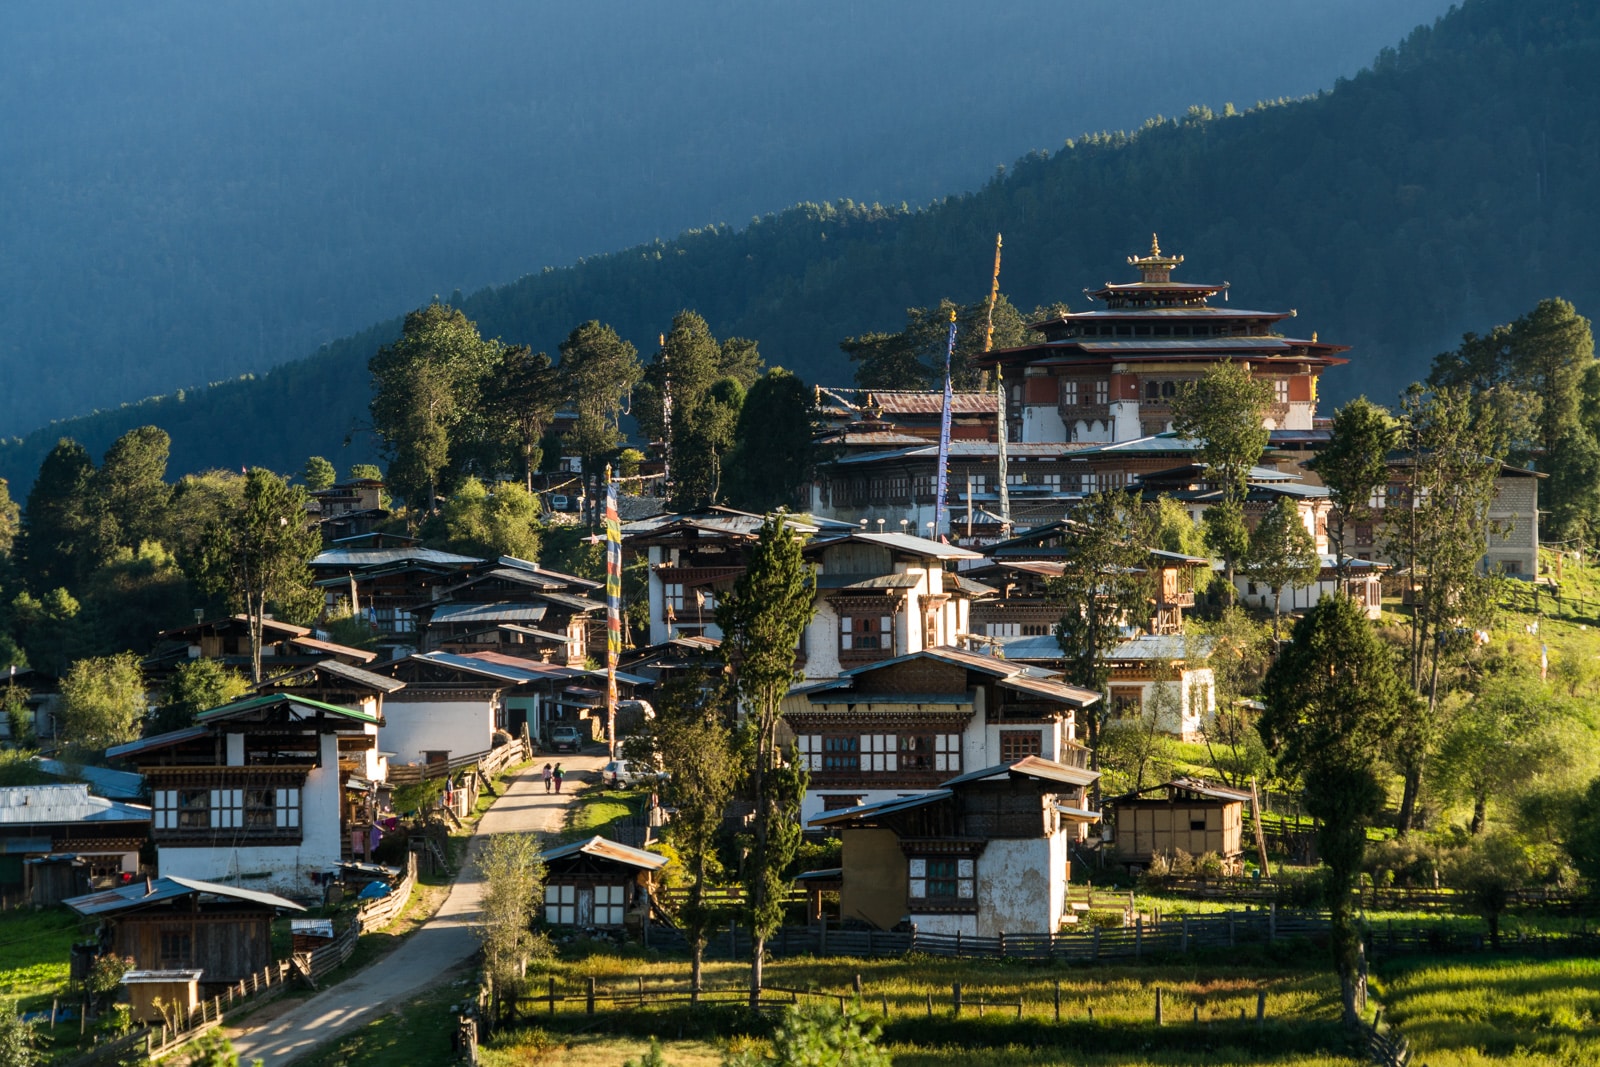 Stunning photos of Bhutan - Gangtey village hilltop at sunset - Lost With Purpose travel blog